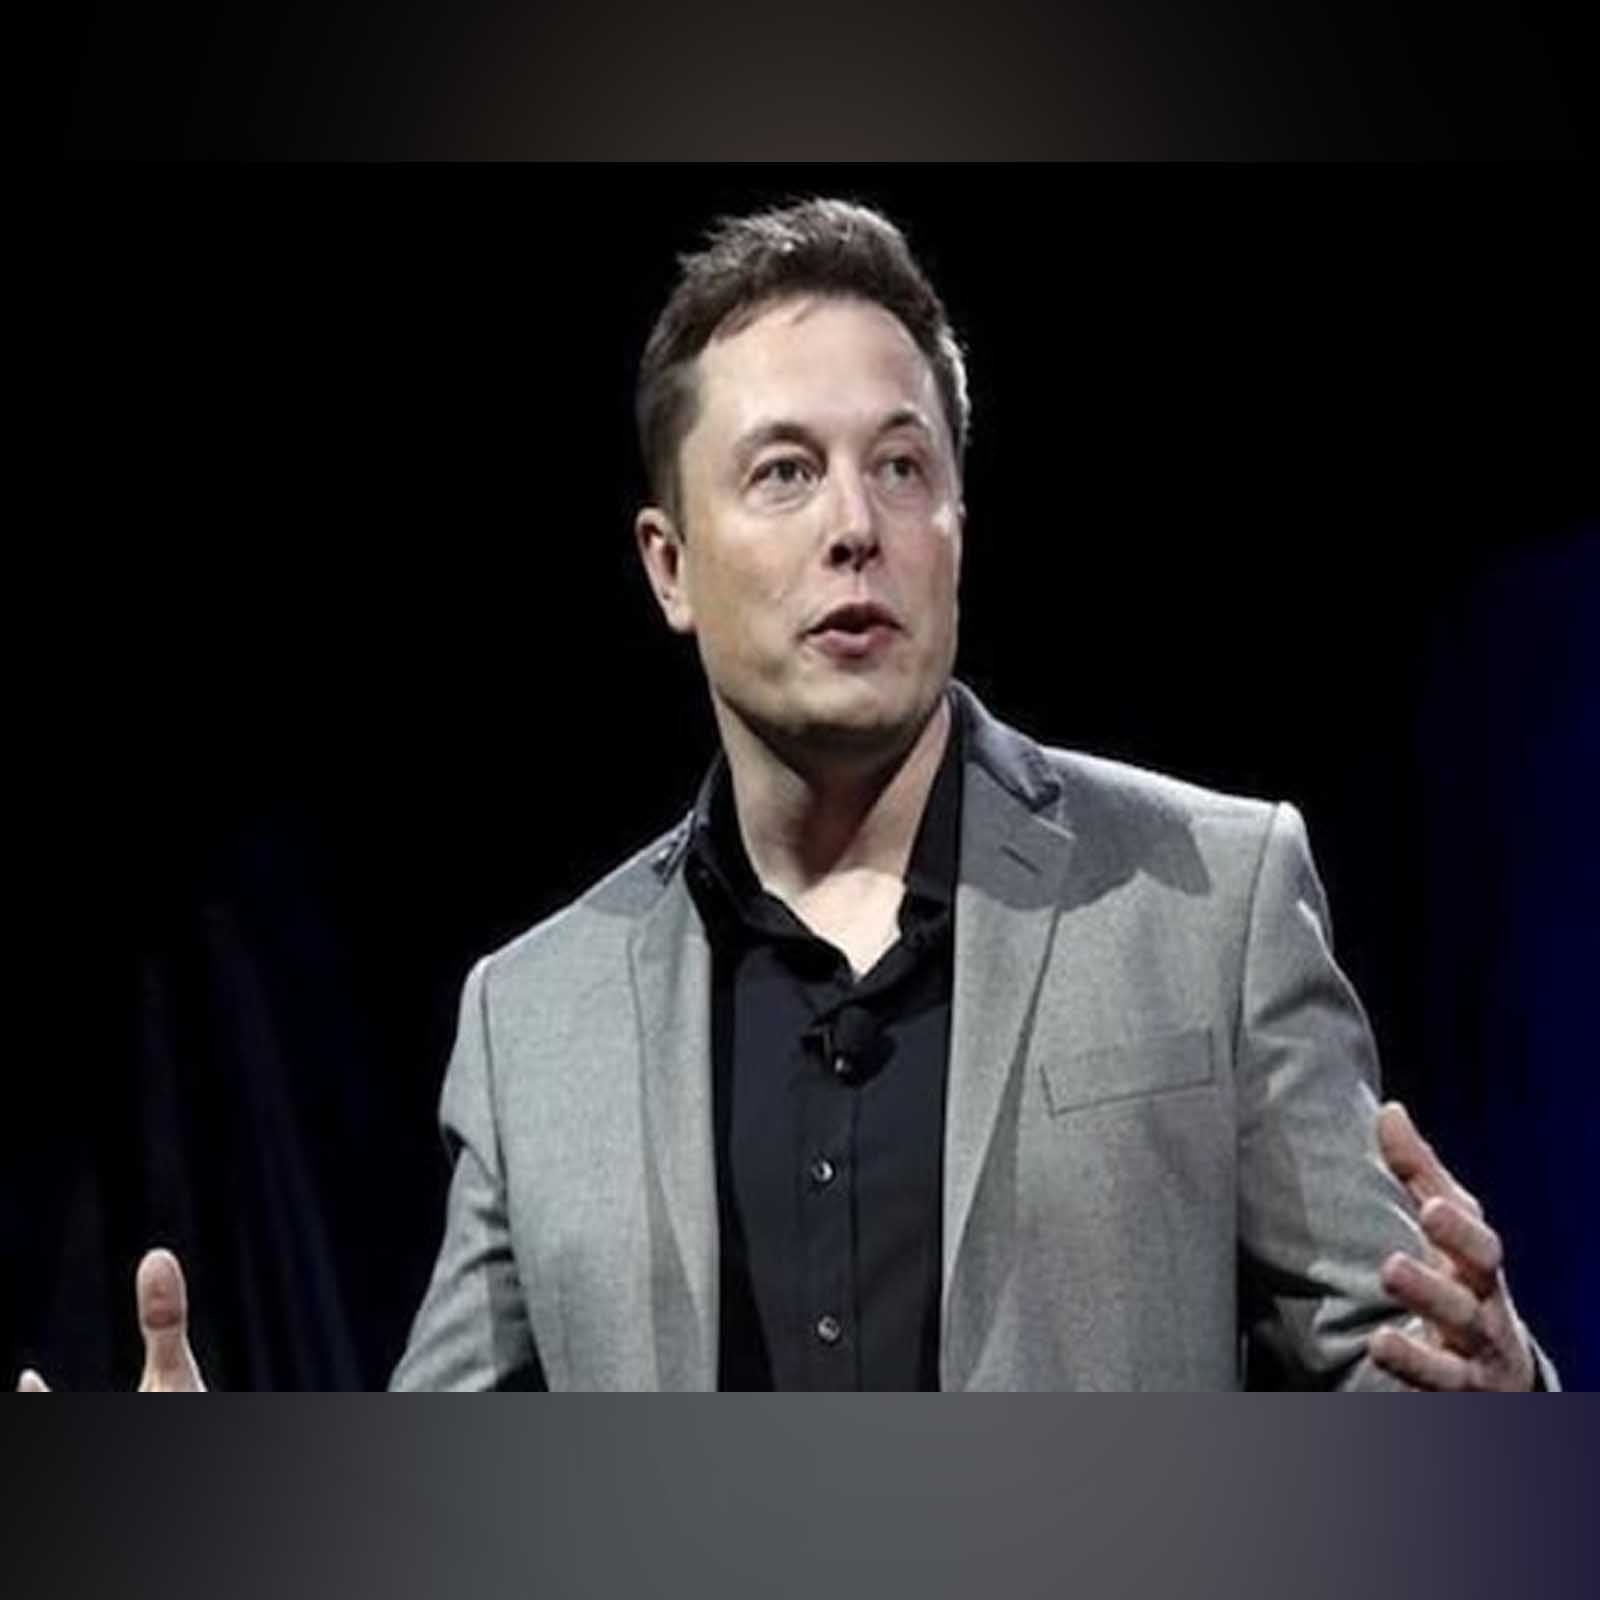 Elon Musk ਨਿਵੇਸ਼ਕਾਂ ਨੂੰ ਦੇ ਰਹੇ ਹਨ ਸ਼ੇਅਰ ਬਾਜ਼ਾਰ 'ਚ ਸਫਲ ਹੋਣ ਦਾ ਮੰਤਰ